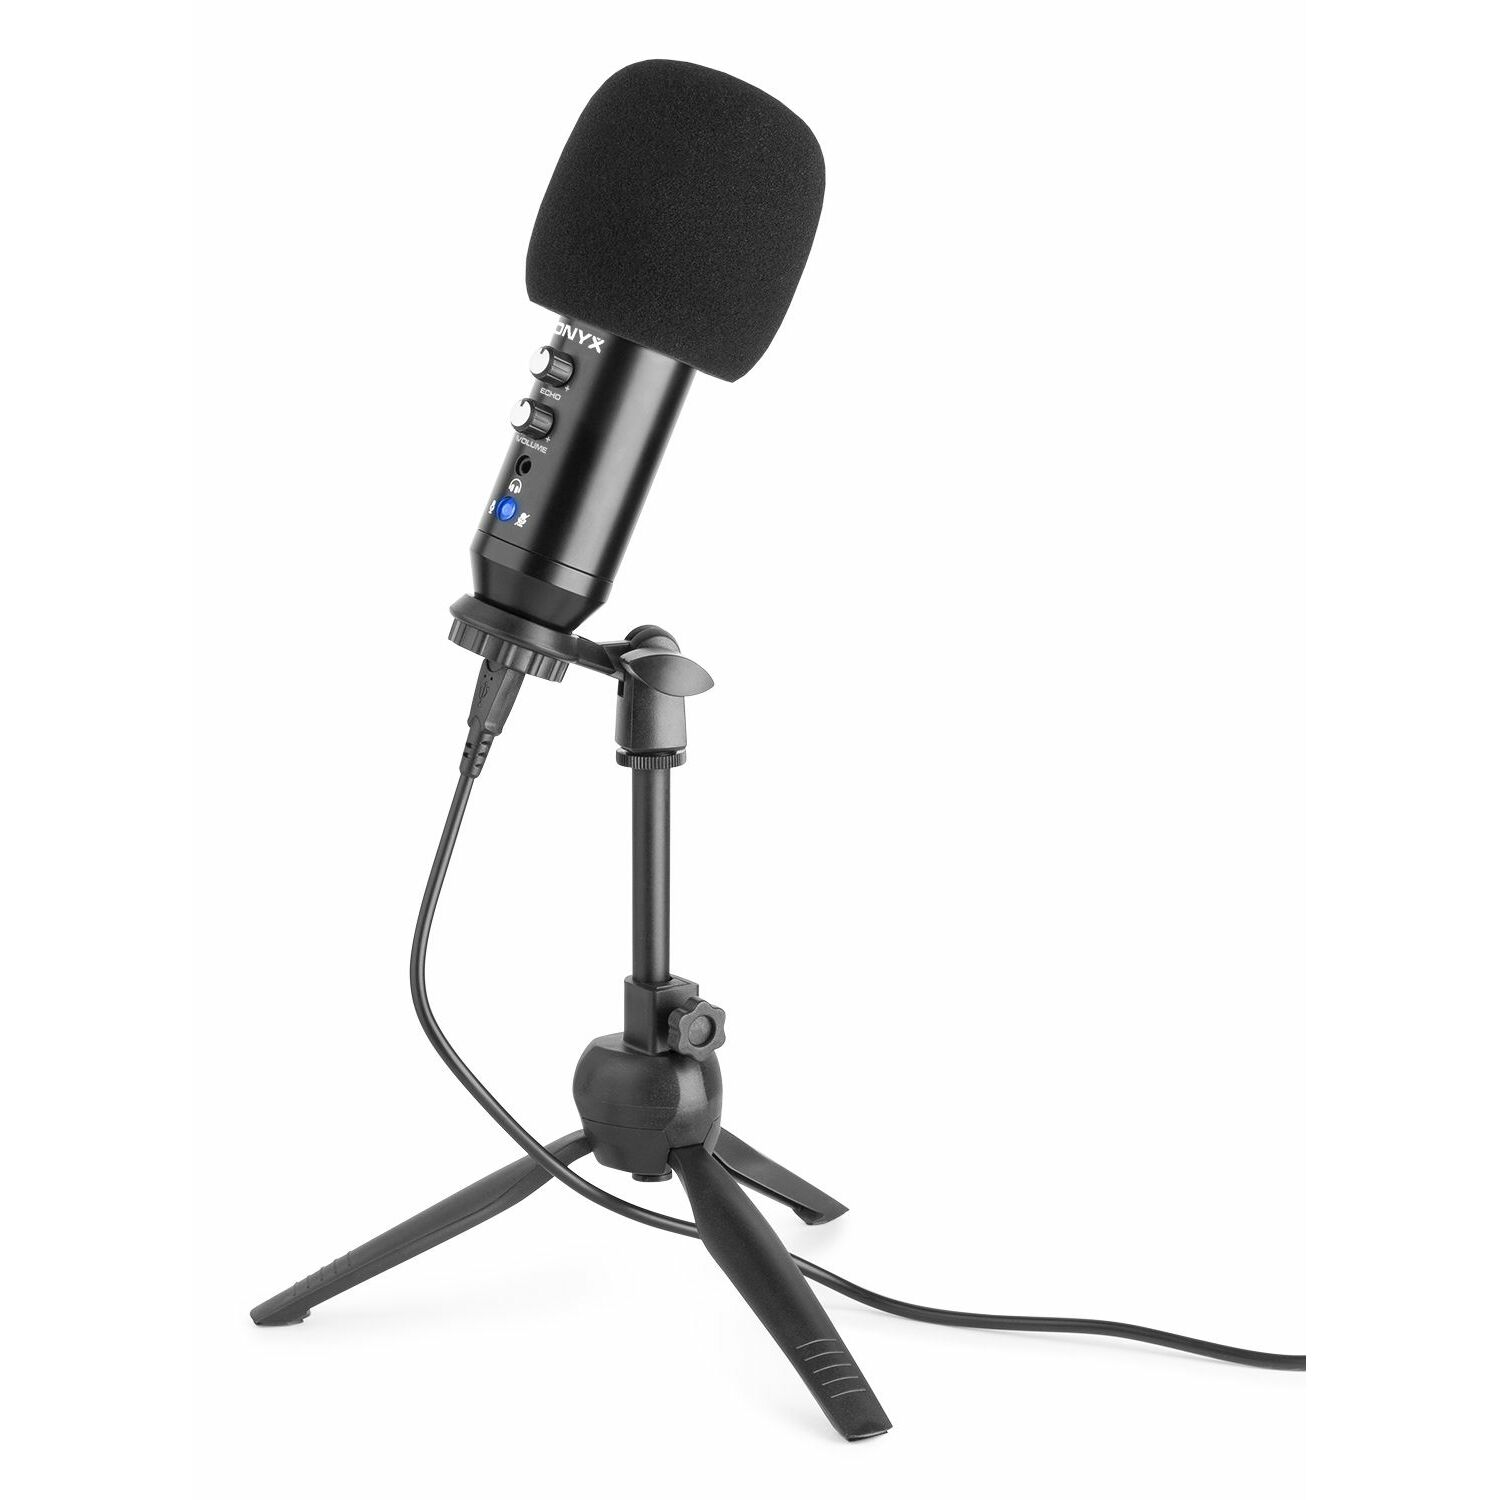 Studio microfoon - Vonyx CM320B USB microfoon met tafelstandaard - Zwart